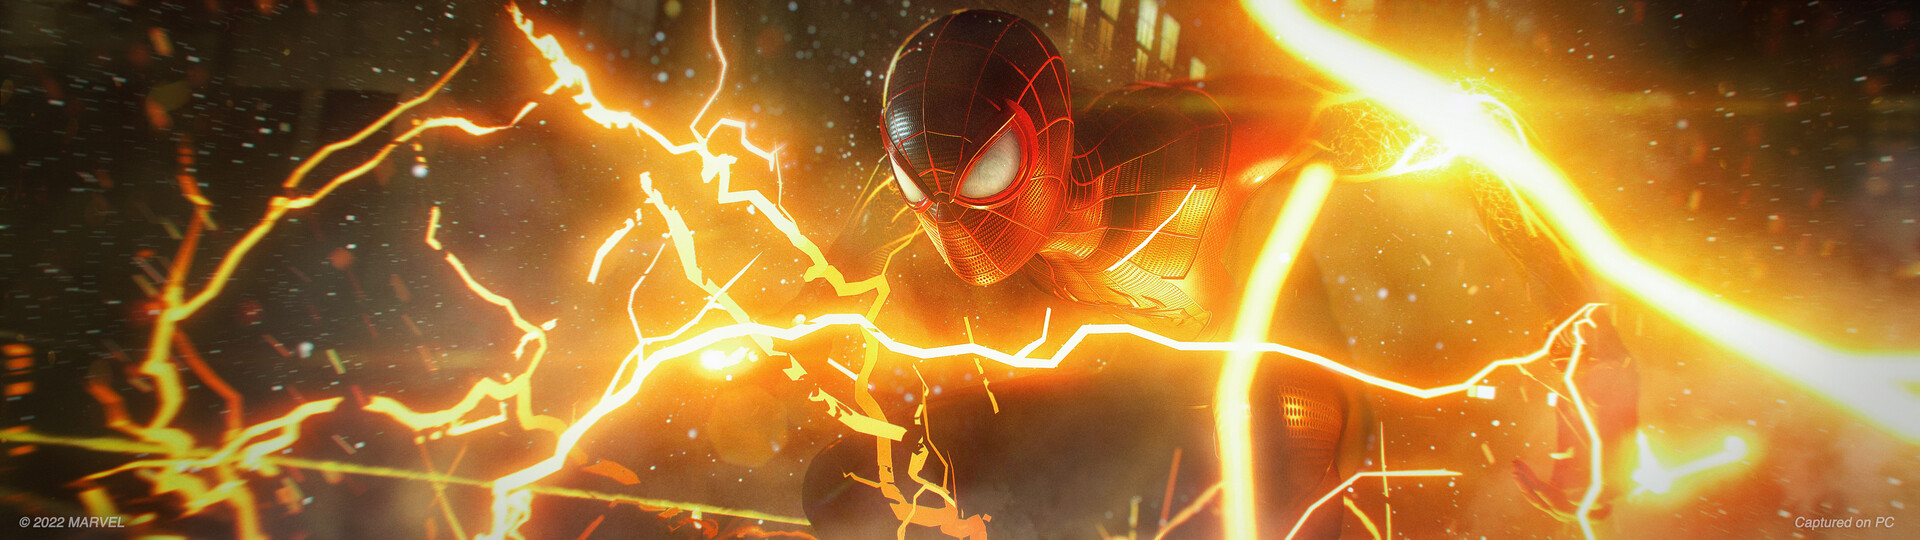 Marvel's Spider-Man Remastered Cd Key Steam GLOBAL